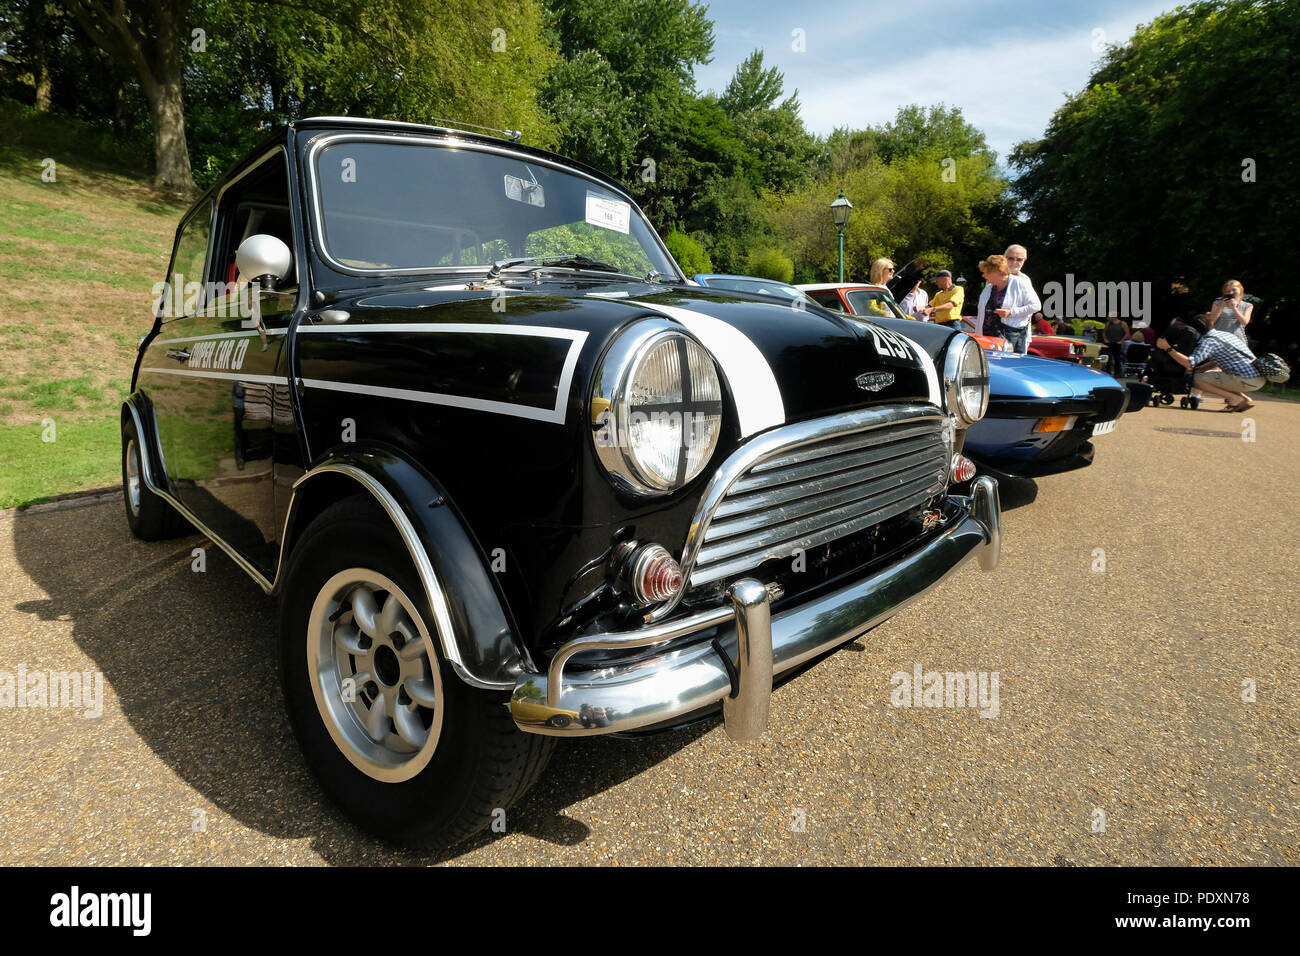 Black Mini Cooper on display at Classic Car show Stock Photo